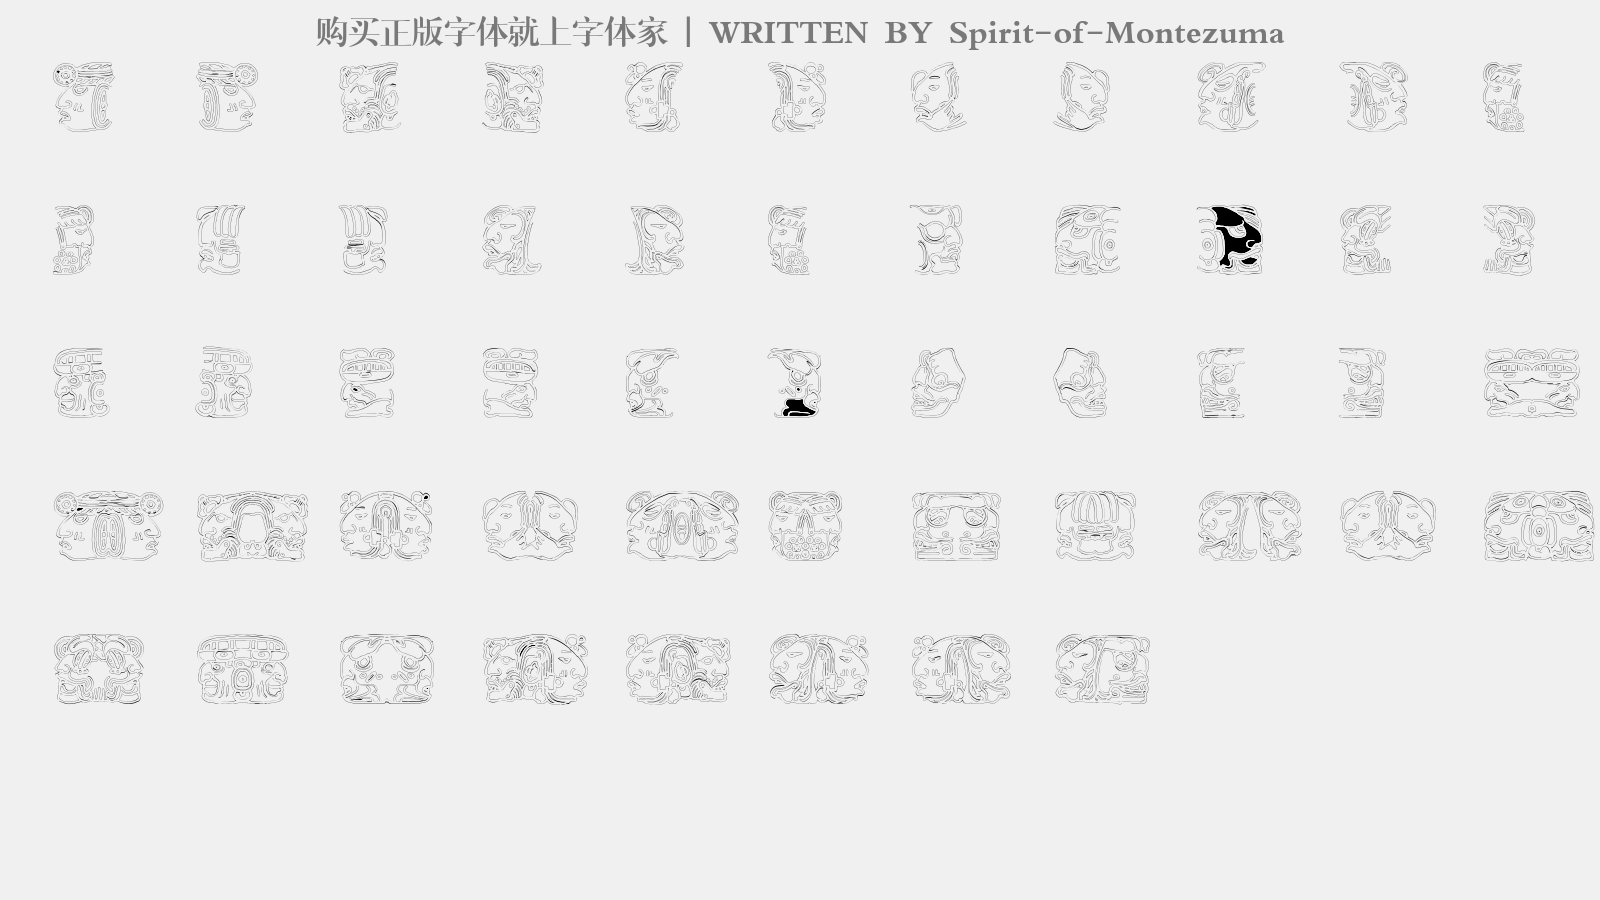 Spirit-of-Montezuma - 大写字母/小写字母/数字